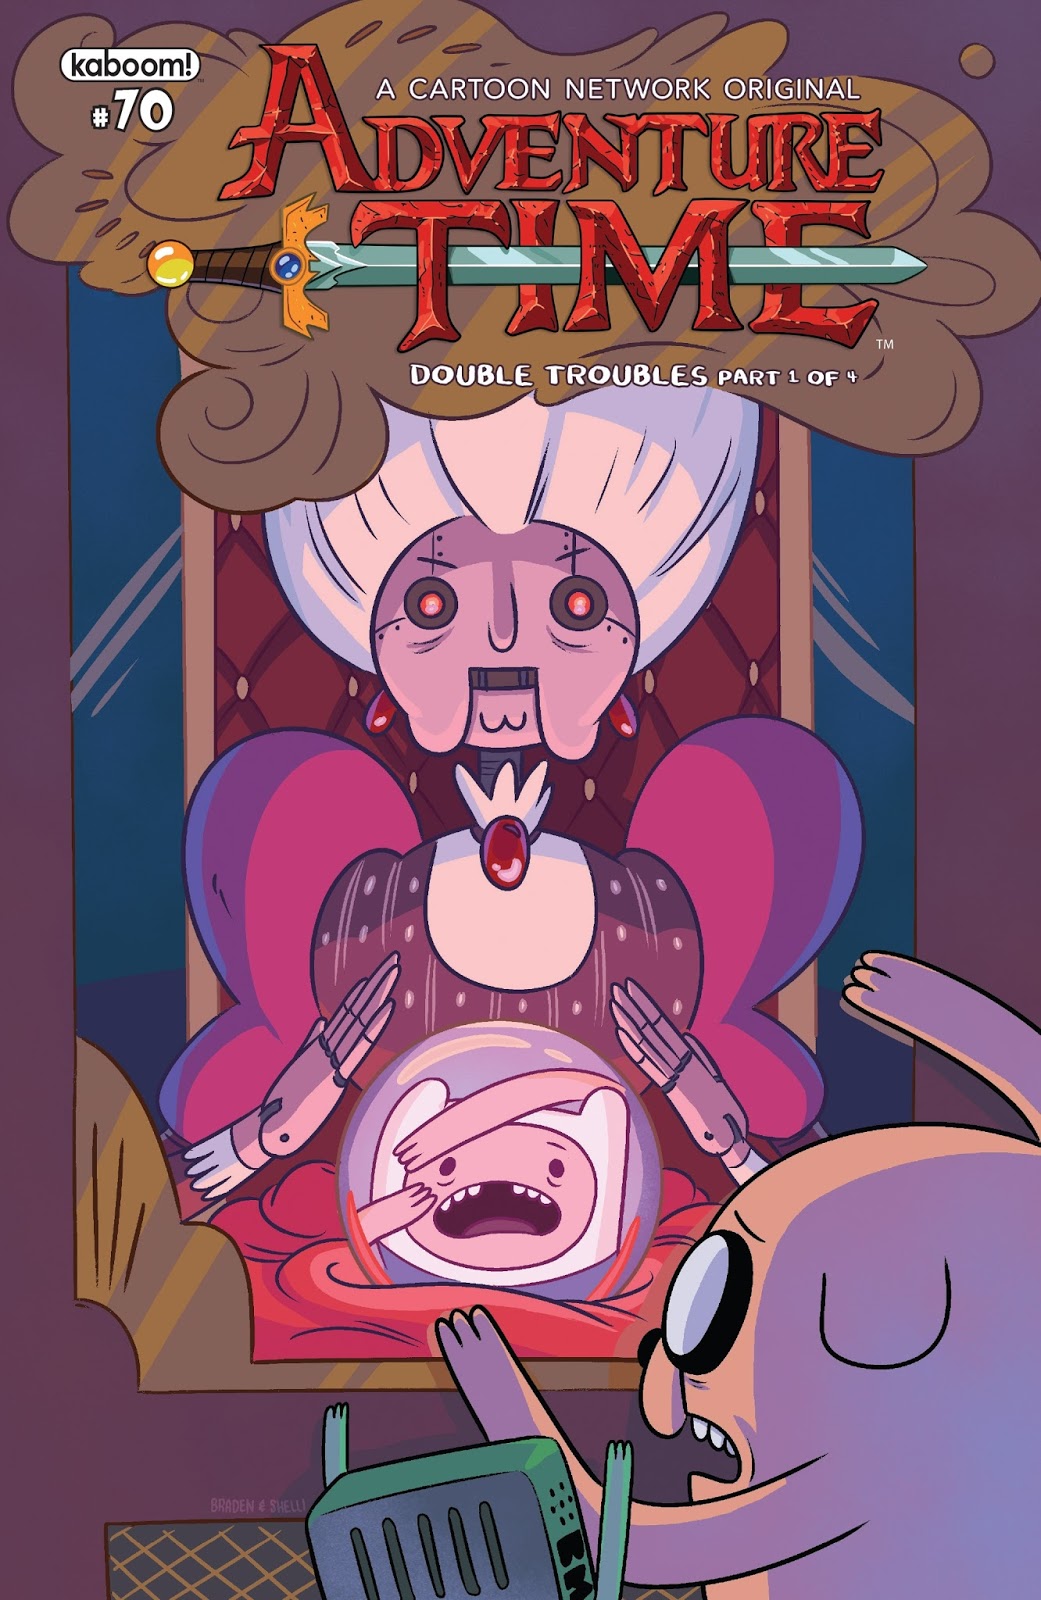 Adventure Time: The Flip Side Issue 3, Adventure Time Wiki, Fandom